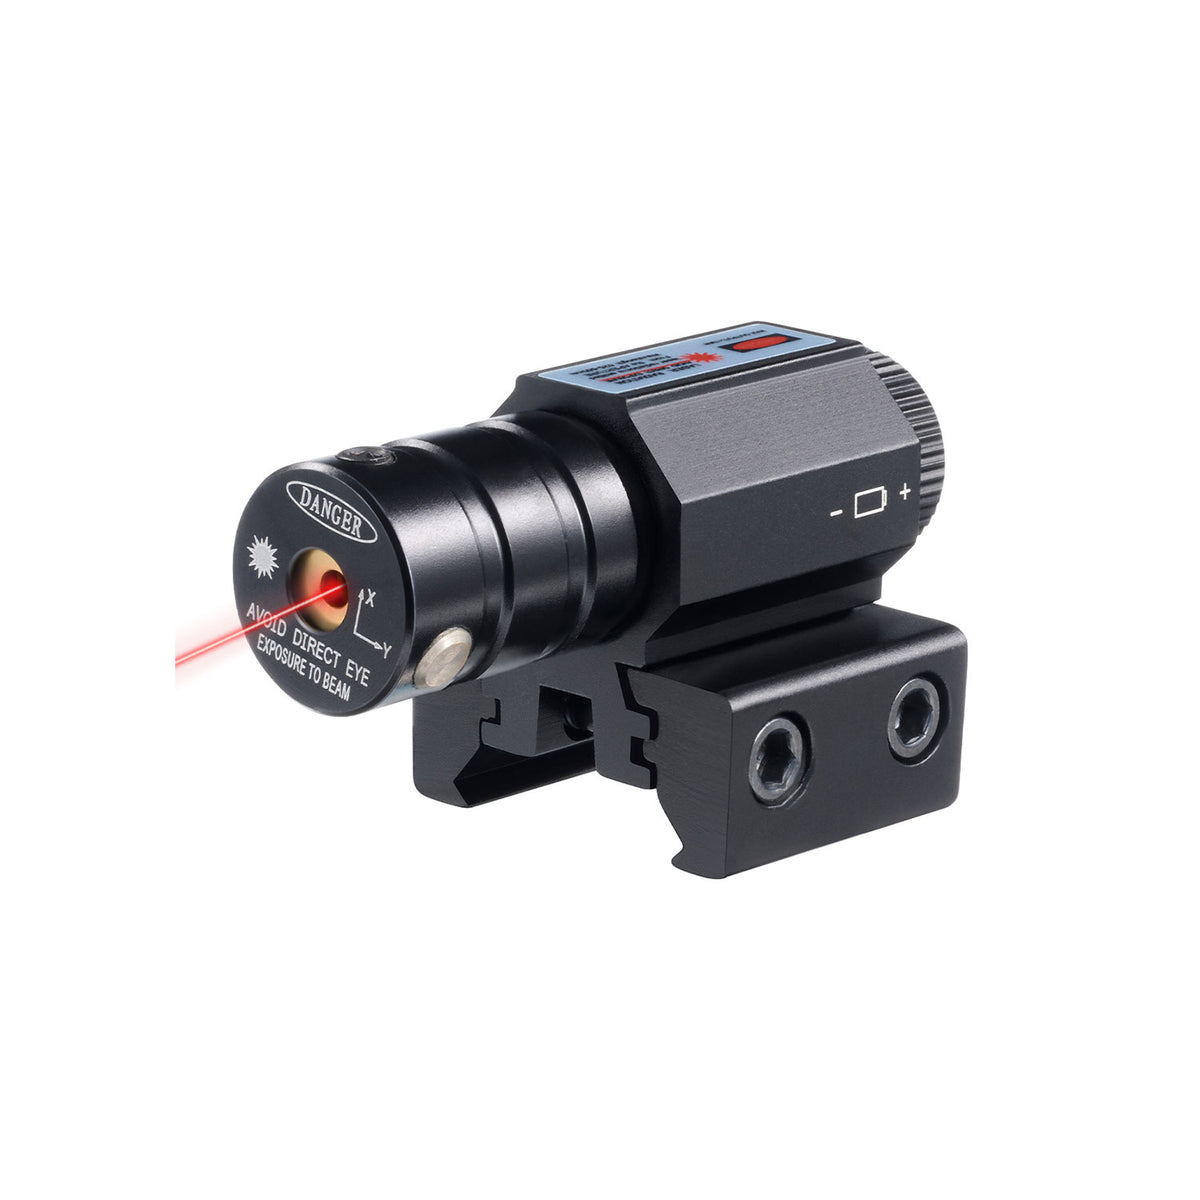 Low Profile red Laser Pistol sight Rail Mount Weaver Picatinny-Polymer 